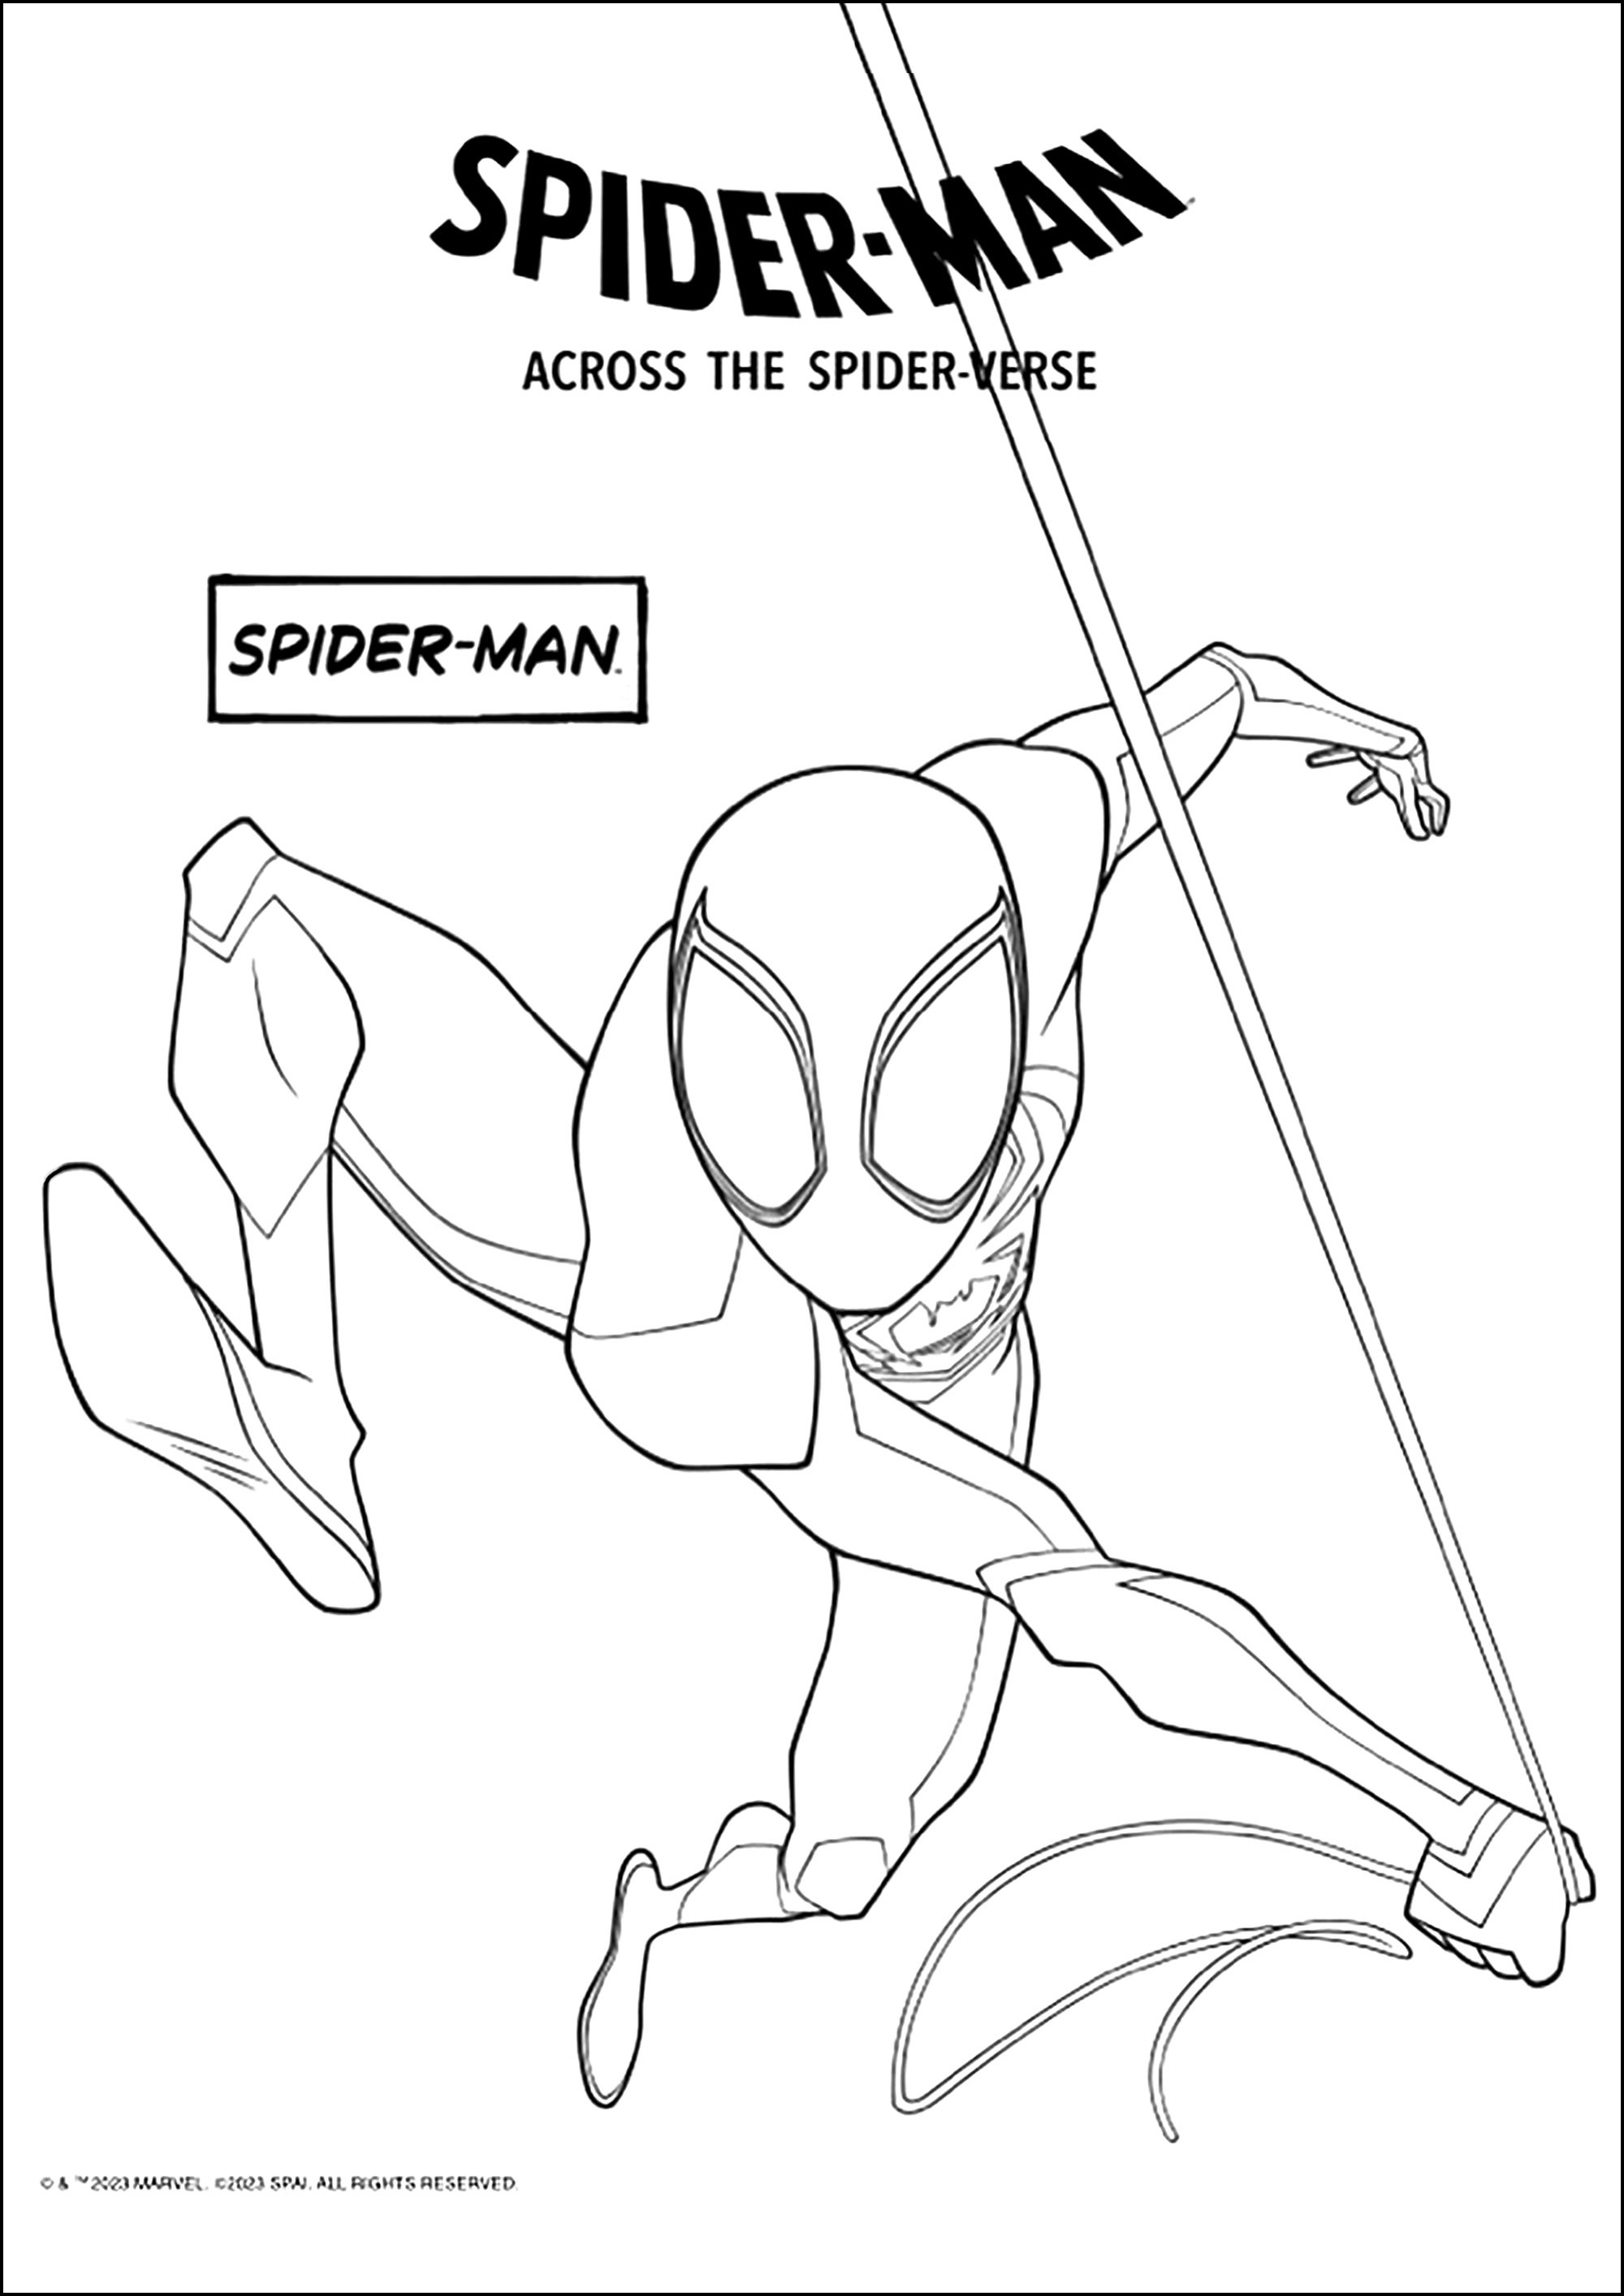 Spider-Man (Mike Morales)